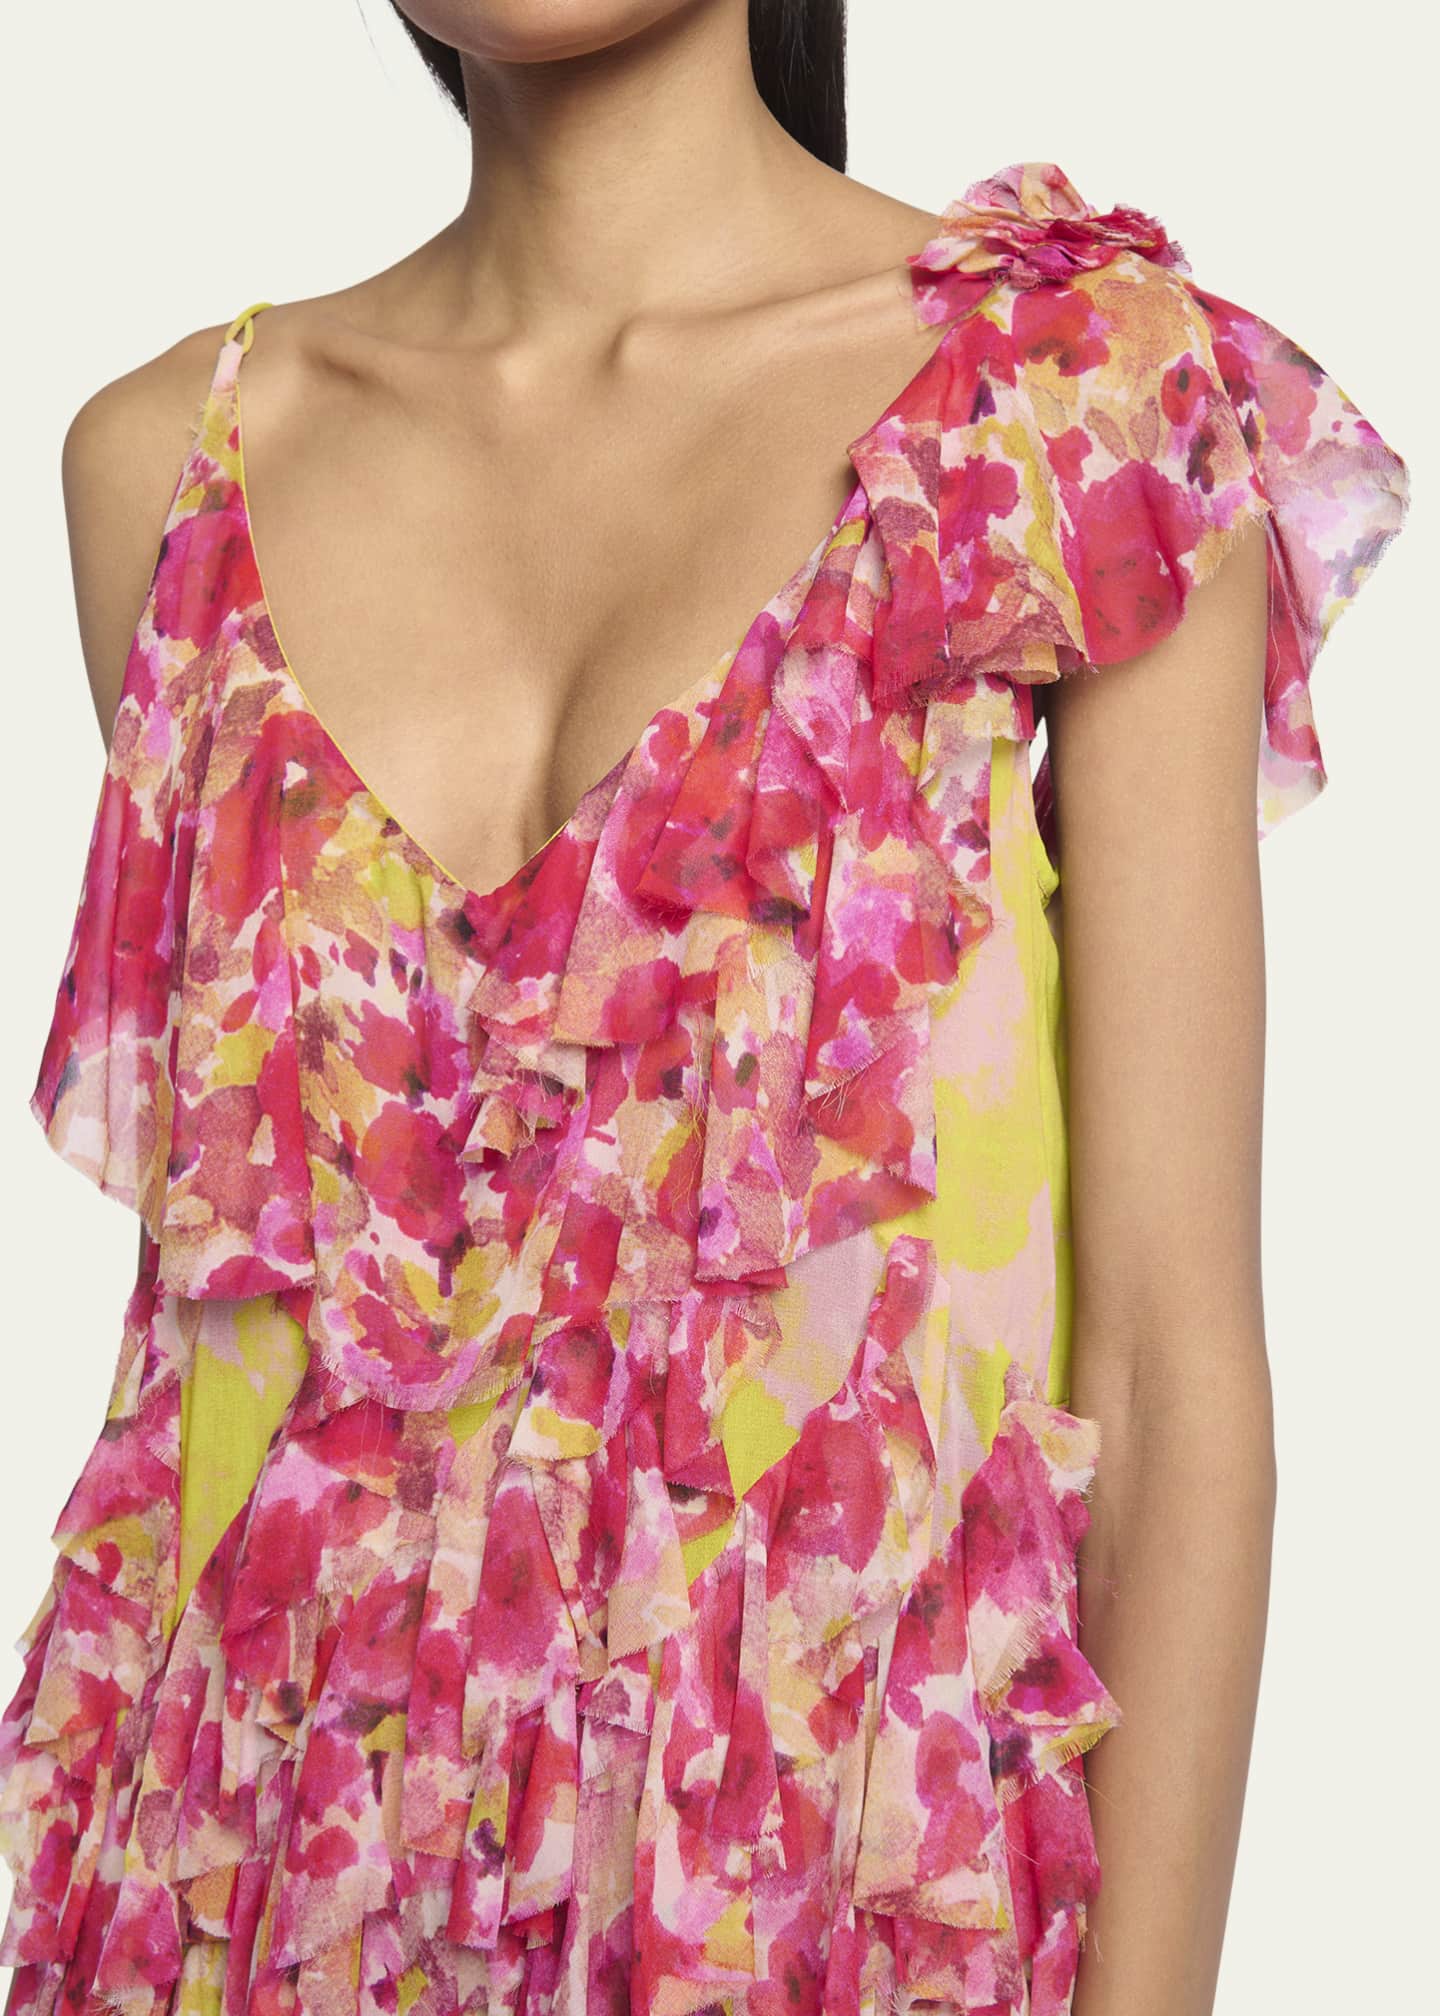 Dries Van Noten Daylin Asymmetric Midi Dress with Floral-Print Ruffles ...